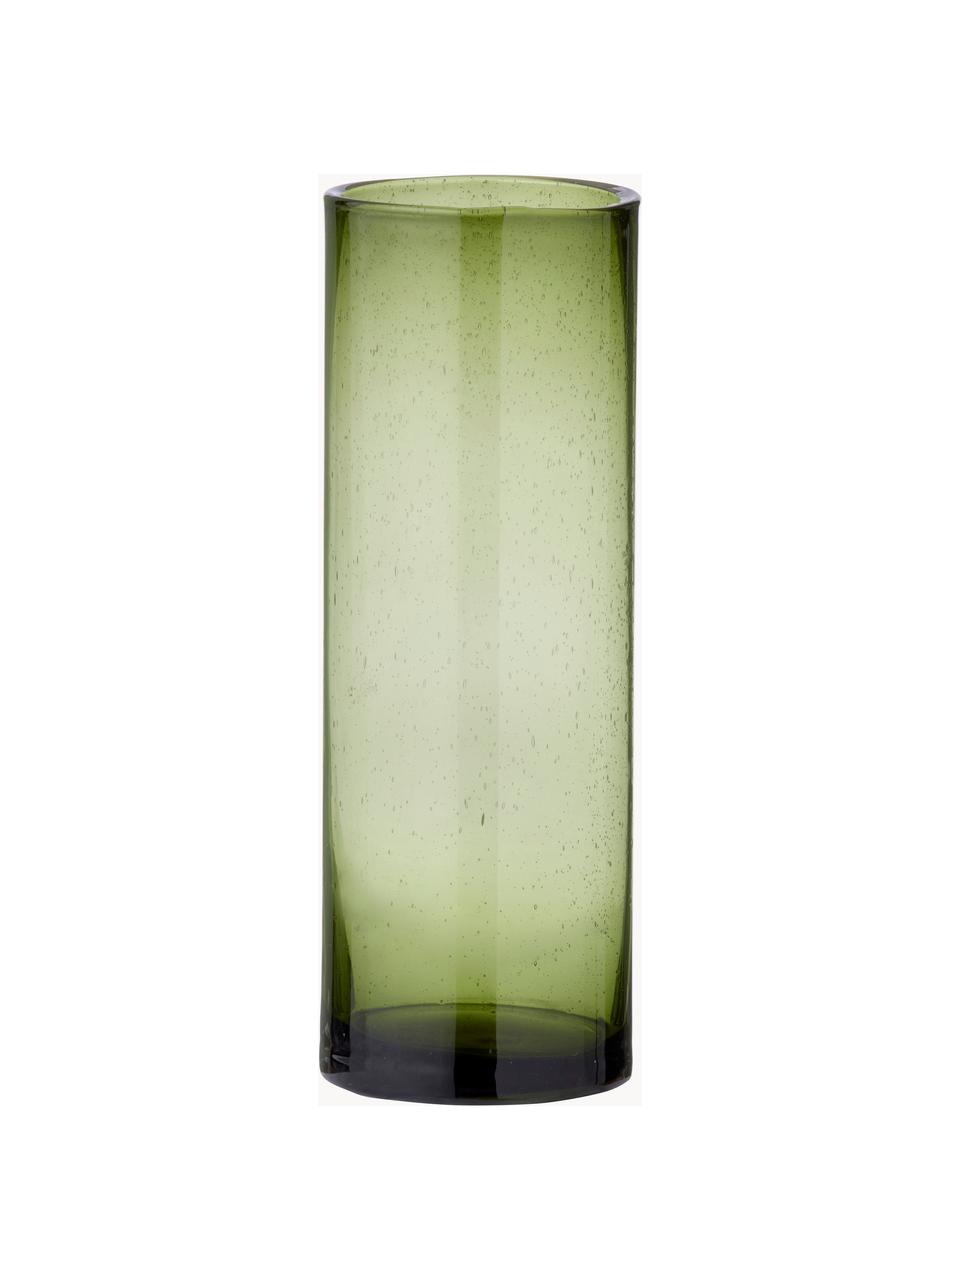 Jarrón de vidrio Salon, 31 cm, Vidrio, Tonos verdes semitransparente, Ø 11 x Al 31 cm